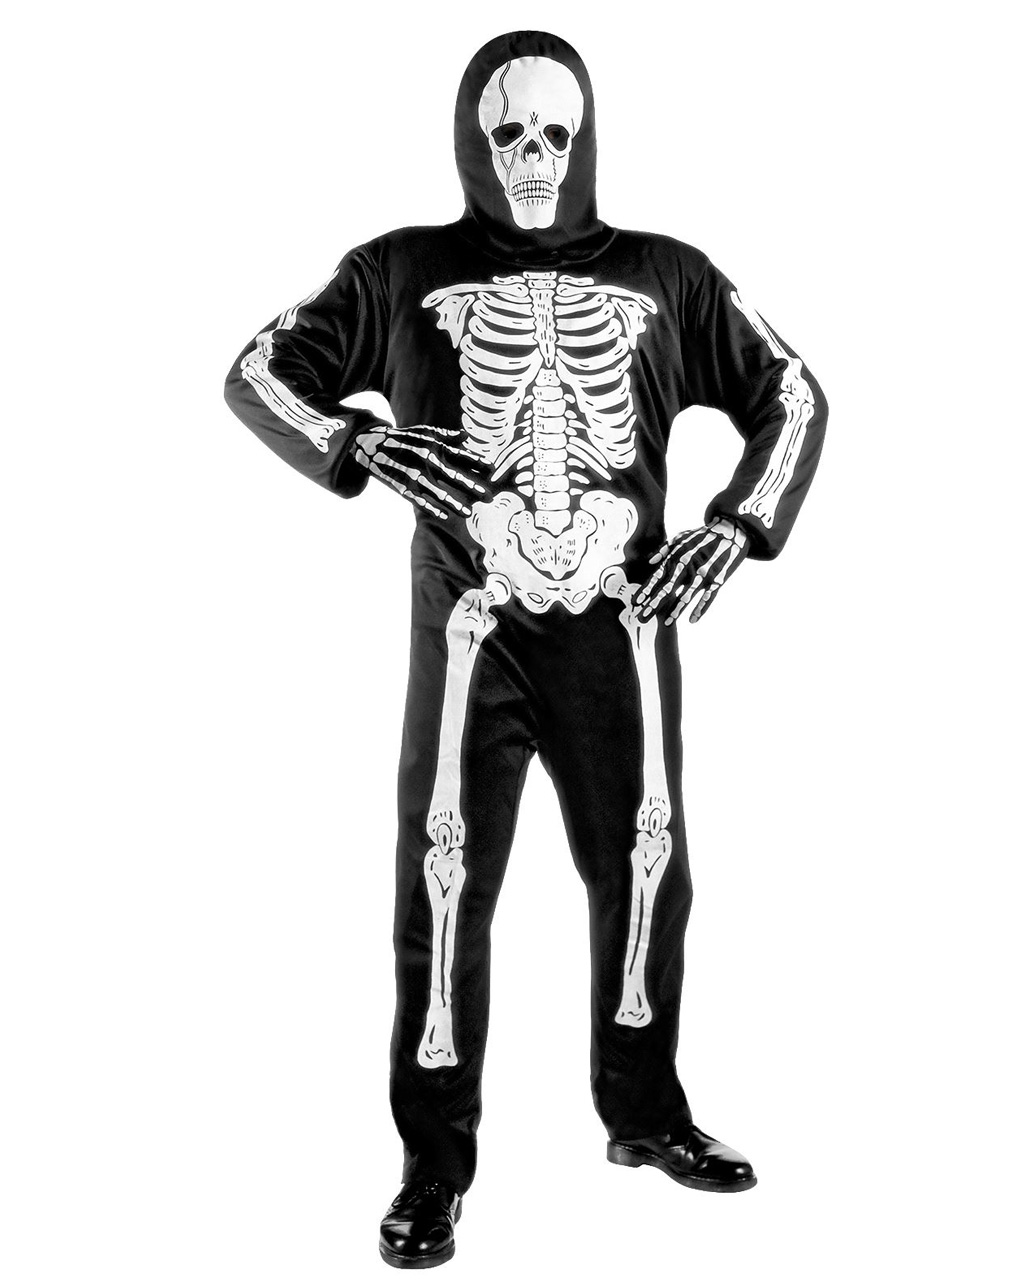 Skeleton Child Costume With Skull Mask buy | Horror-Shop.com